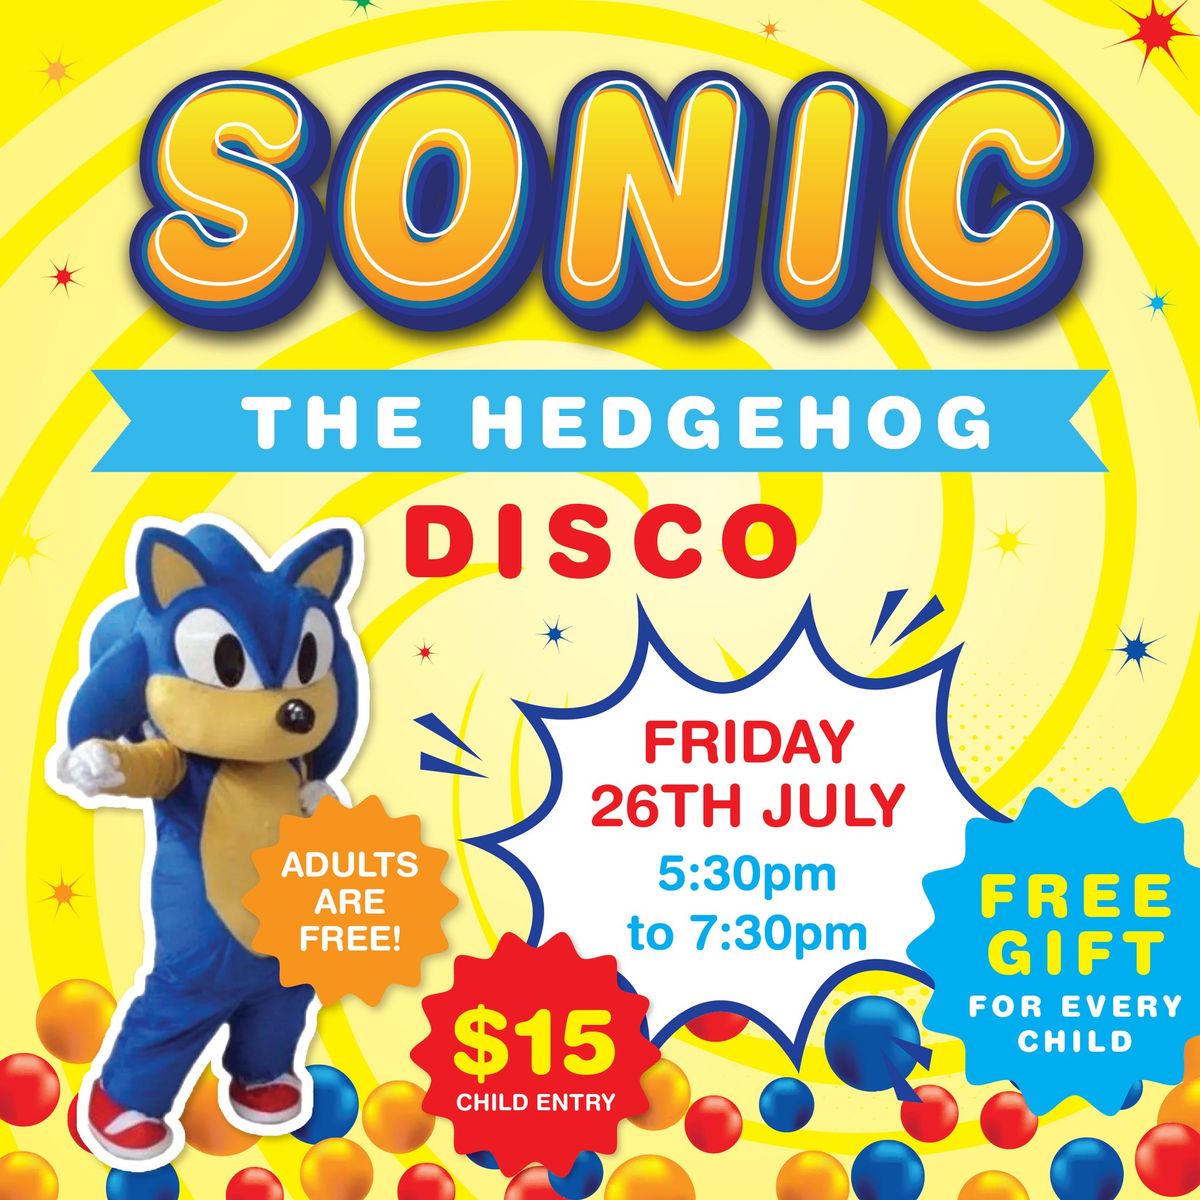 Meet Sonic the Hedgehog Disco!